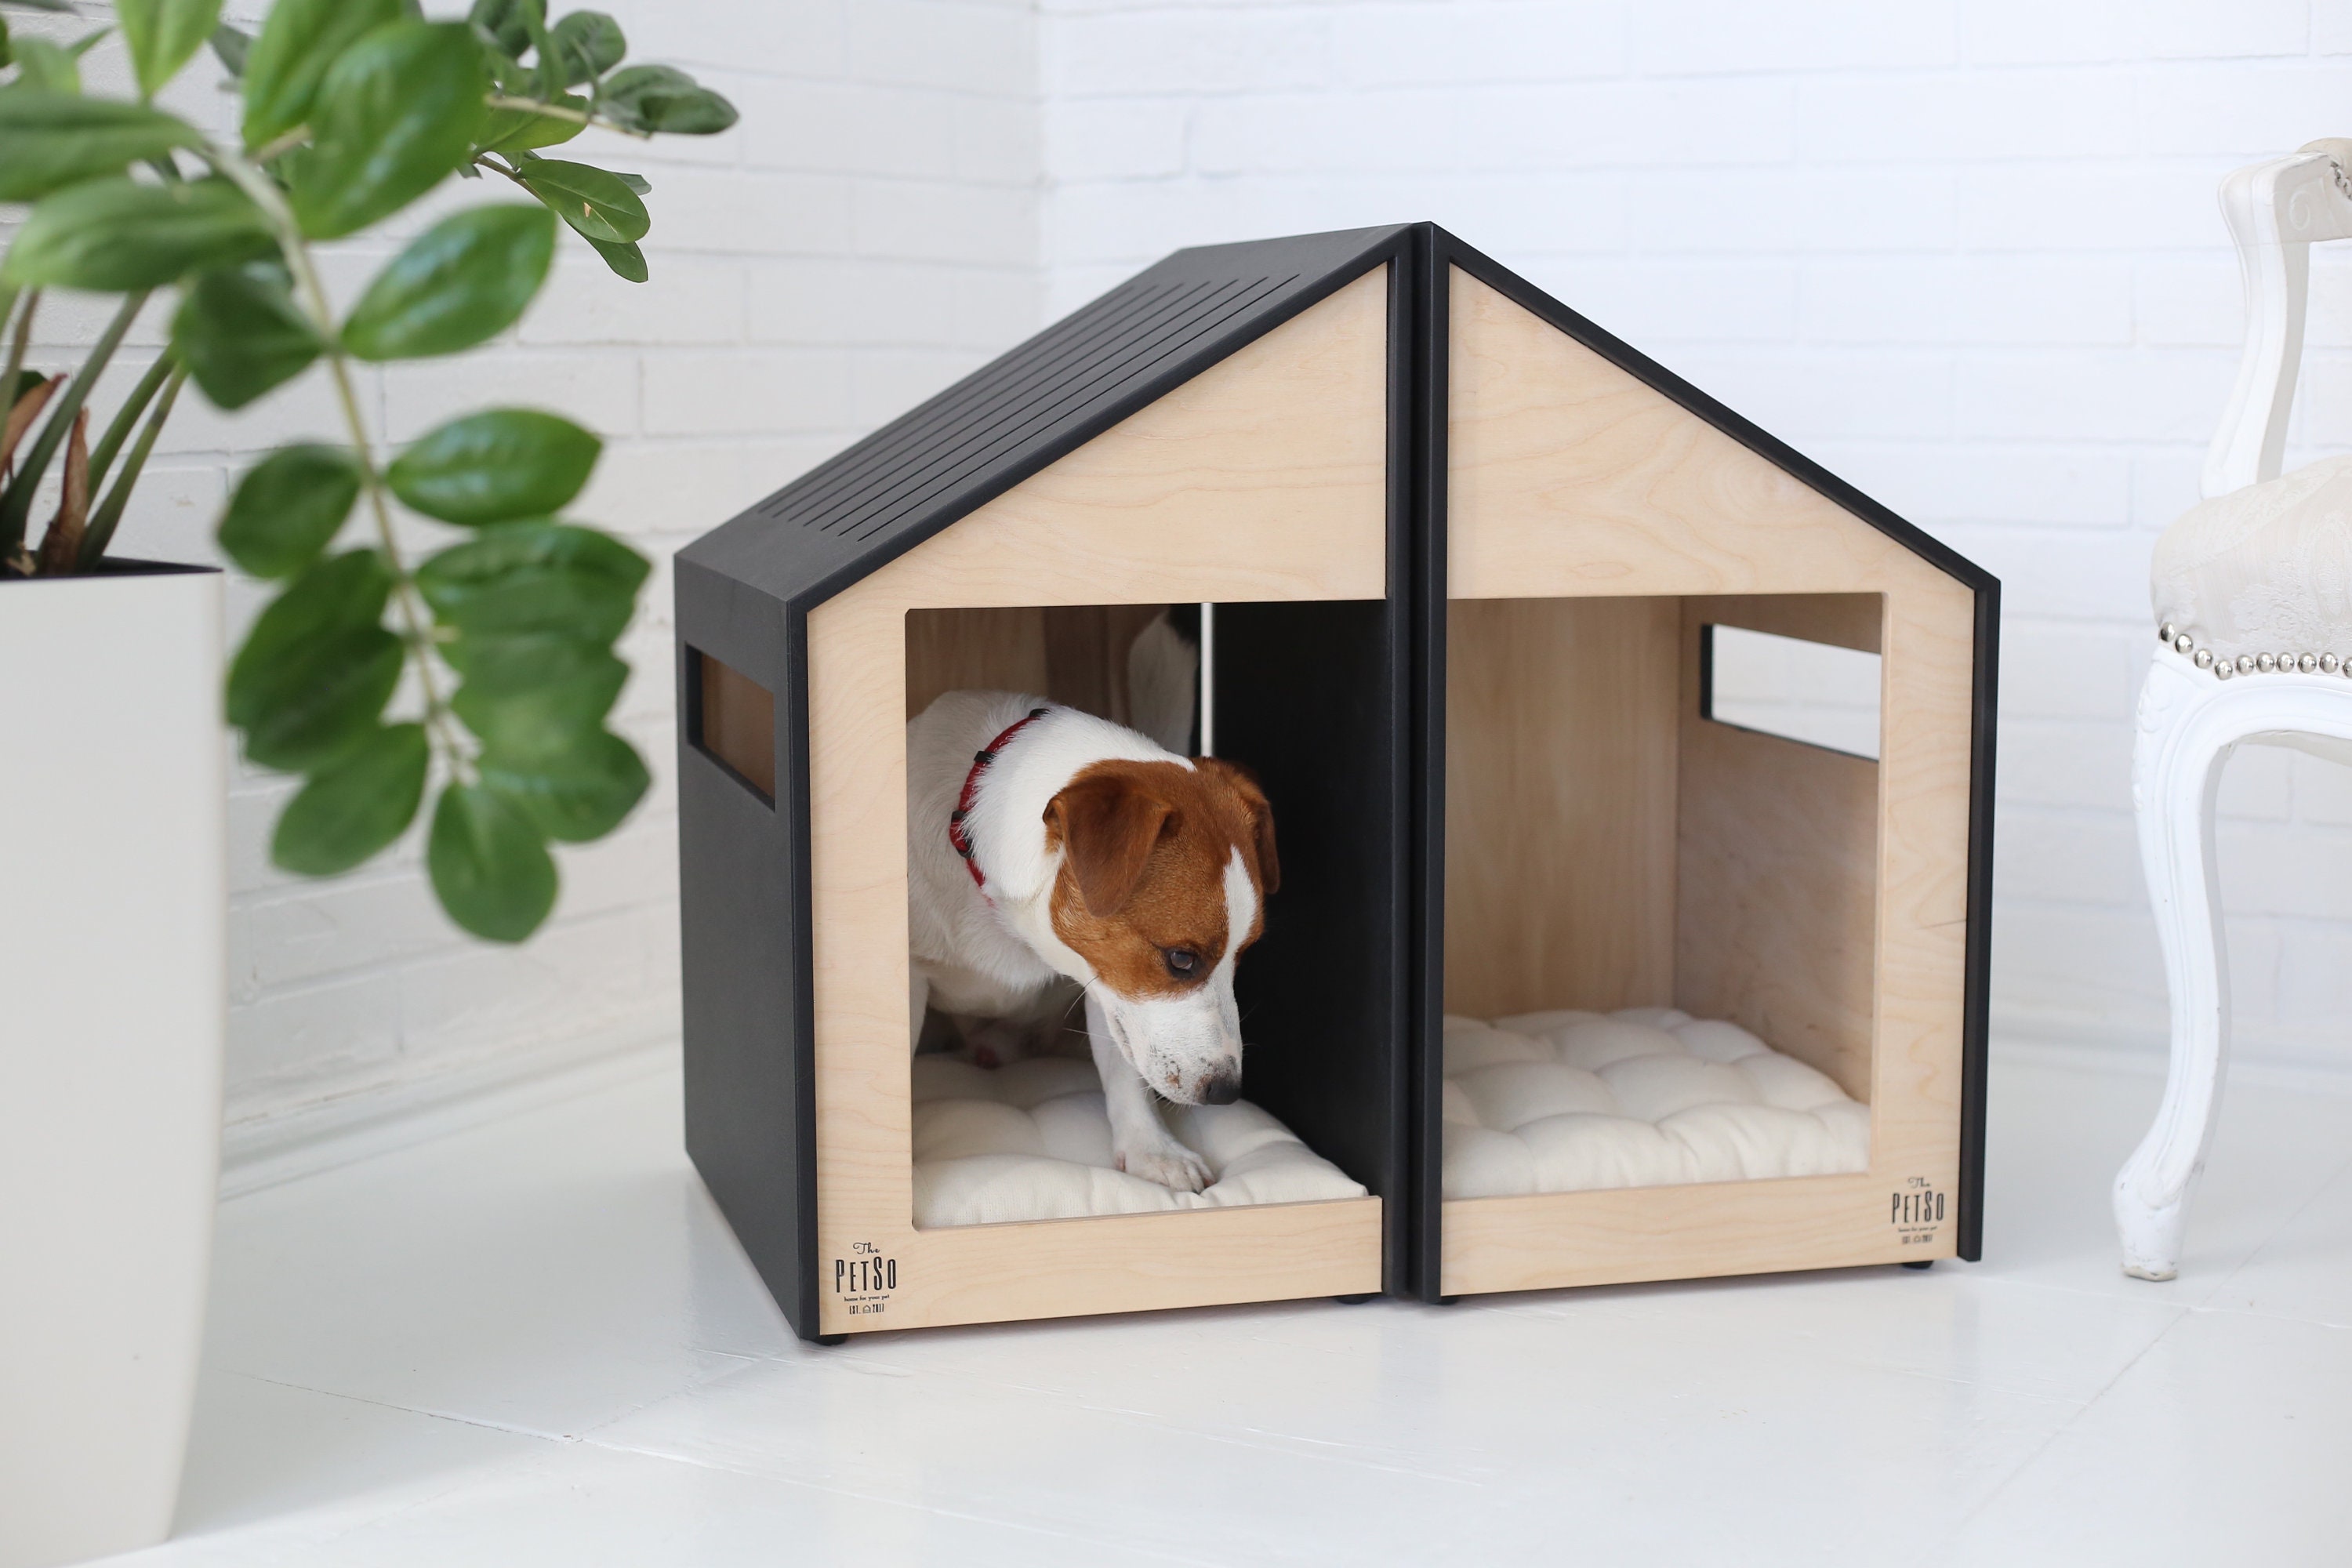 Modernes Haus für zwei Hunde oder Katzen Smart Twins. Hundezwinger,  Hundebox, Hundebett, Katzenbett, Katzenmöbel, Hundemöbel, Indoor Hundehütte.  - .de